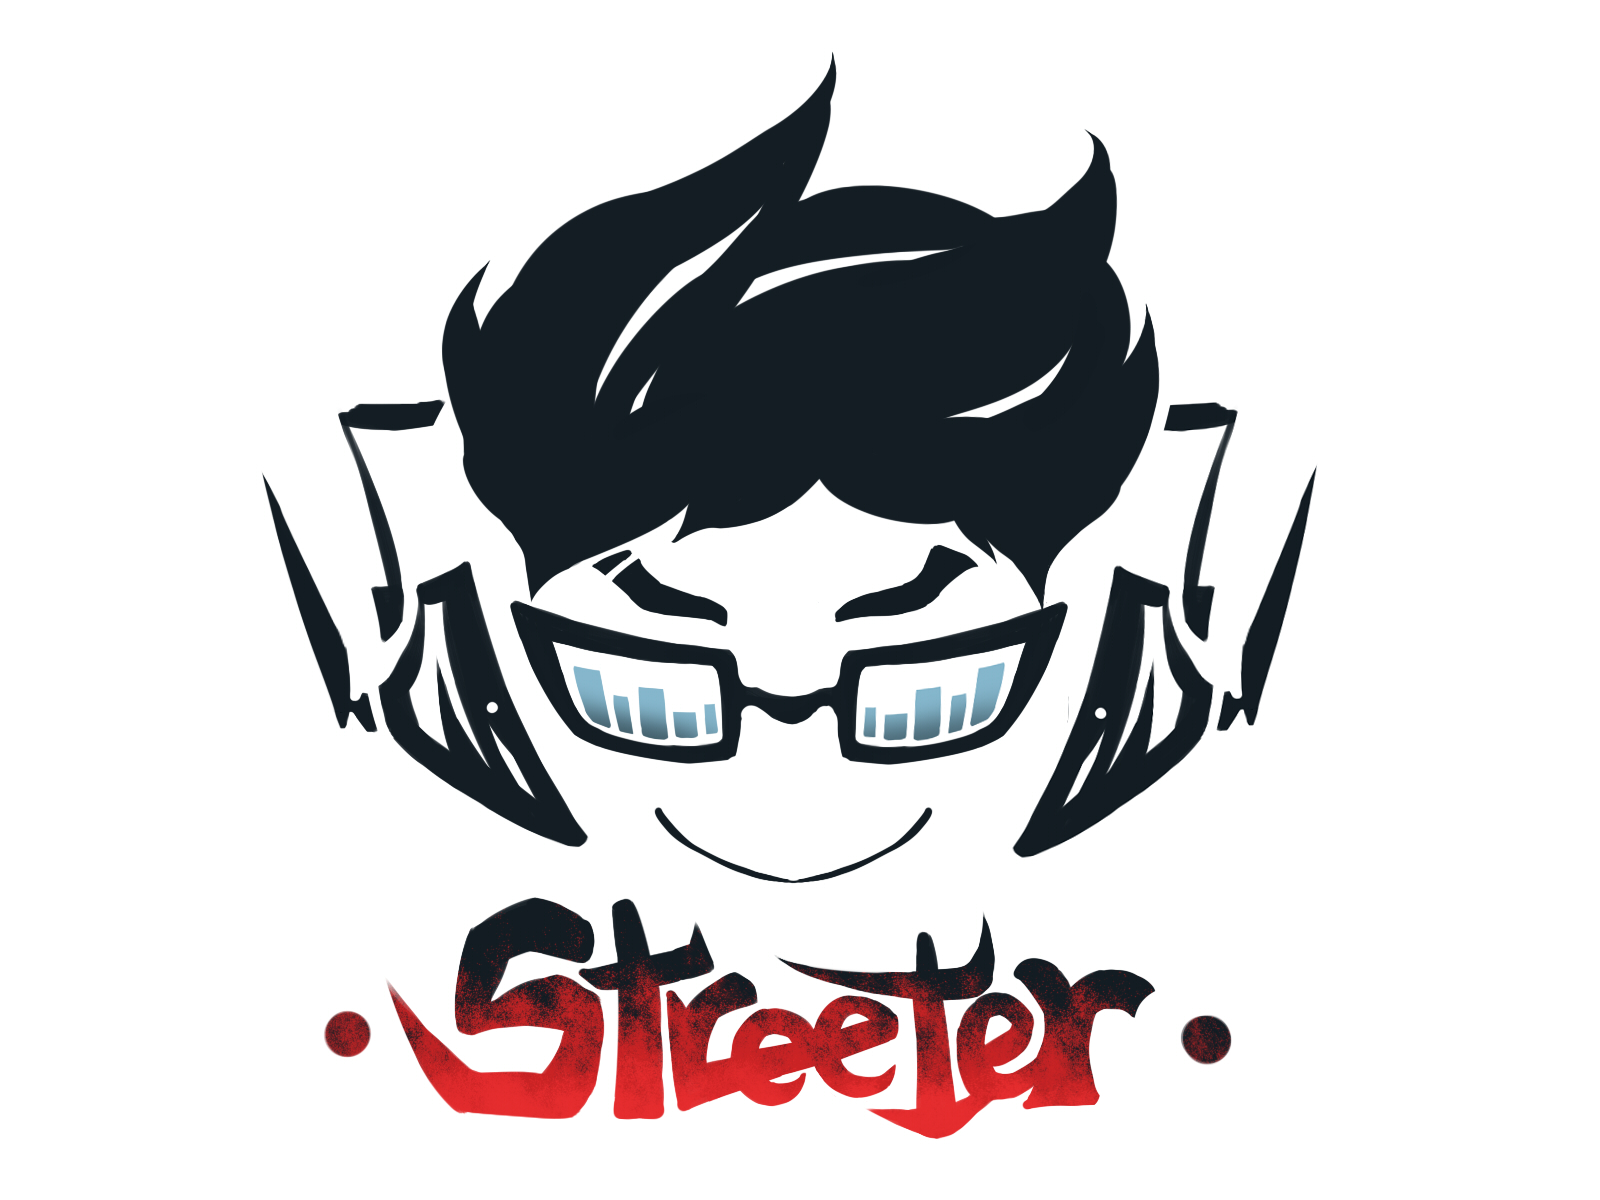 Streeter